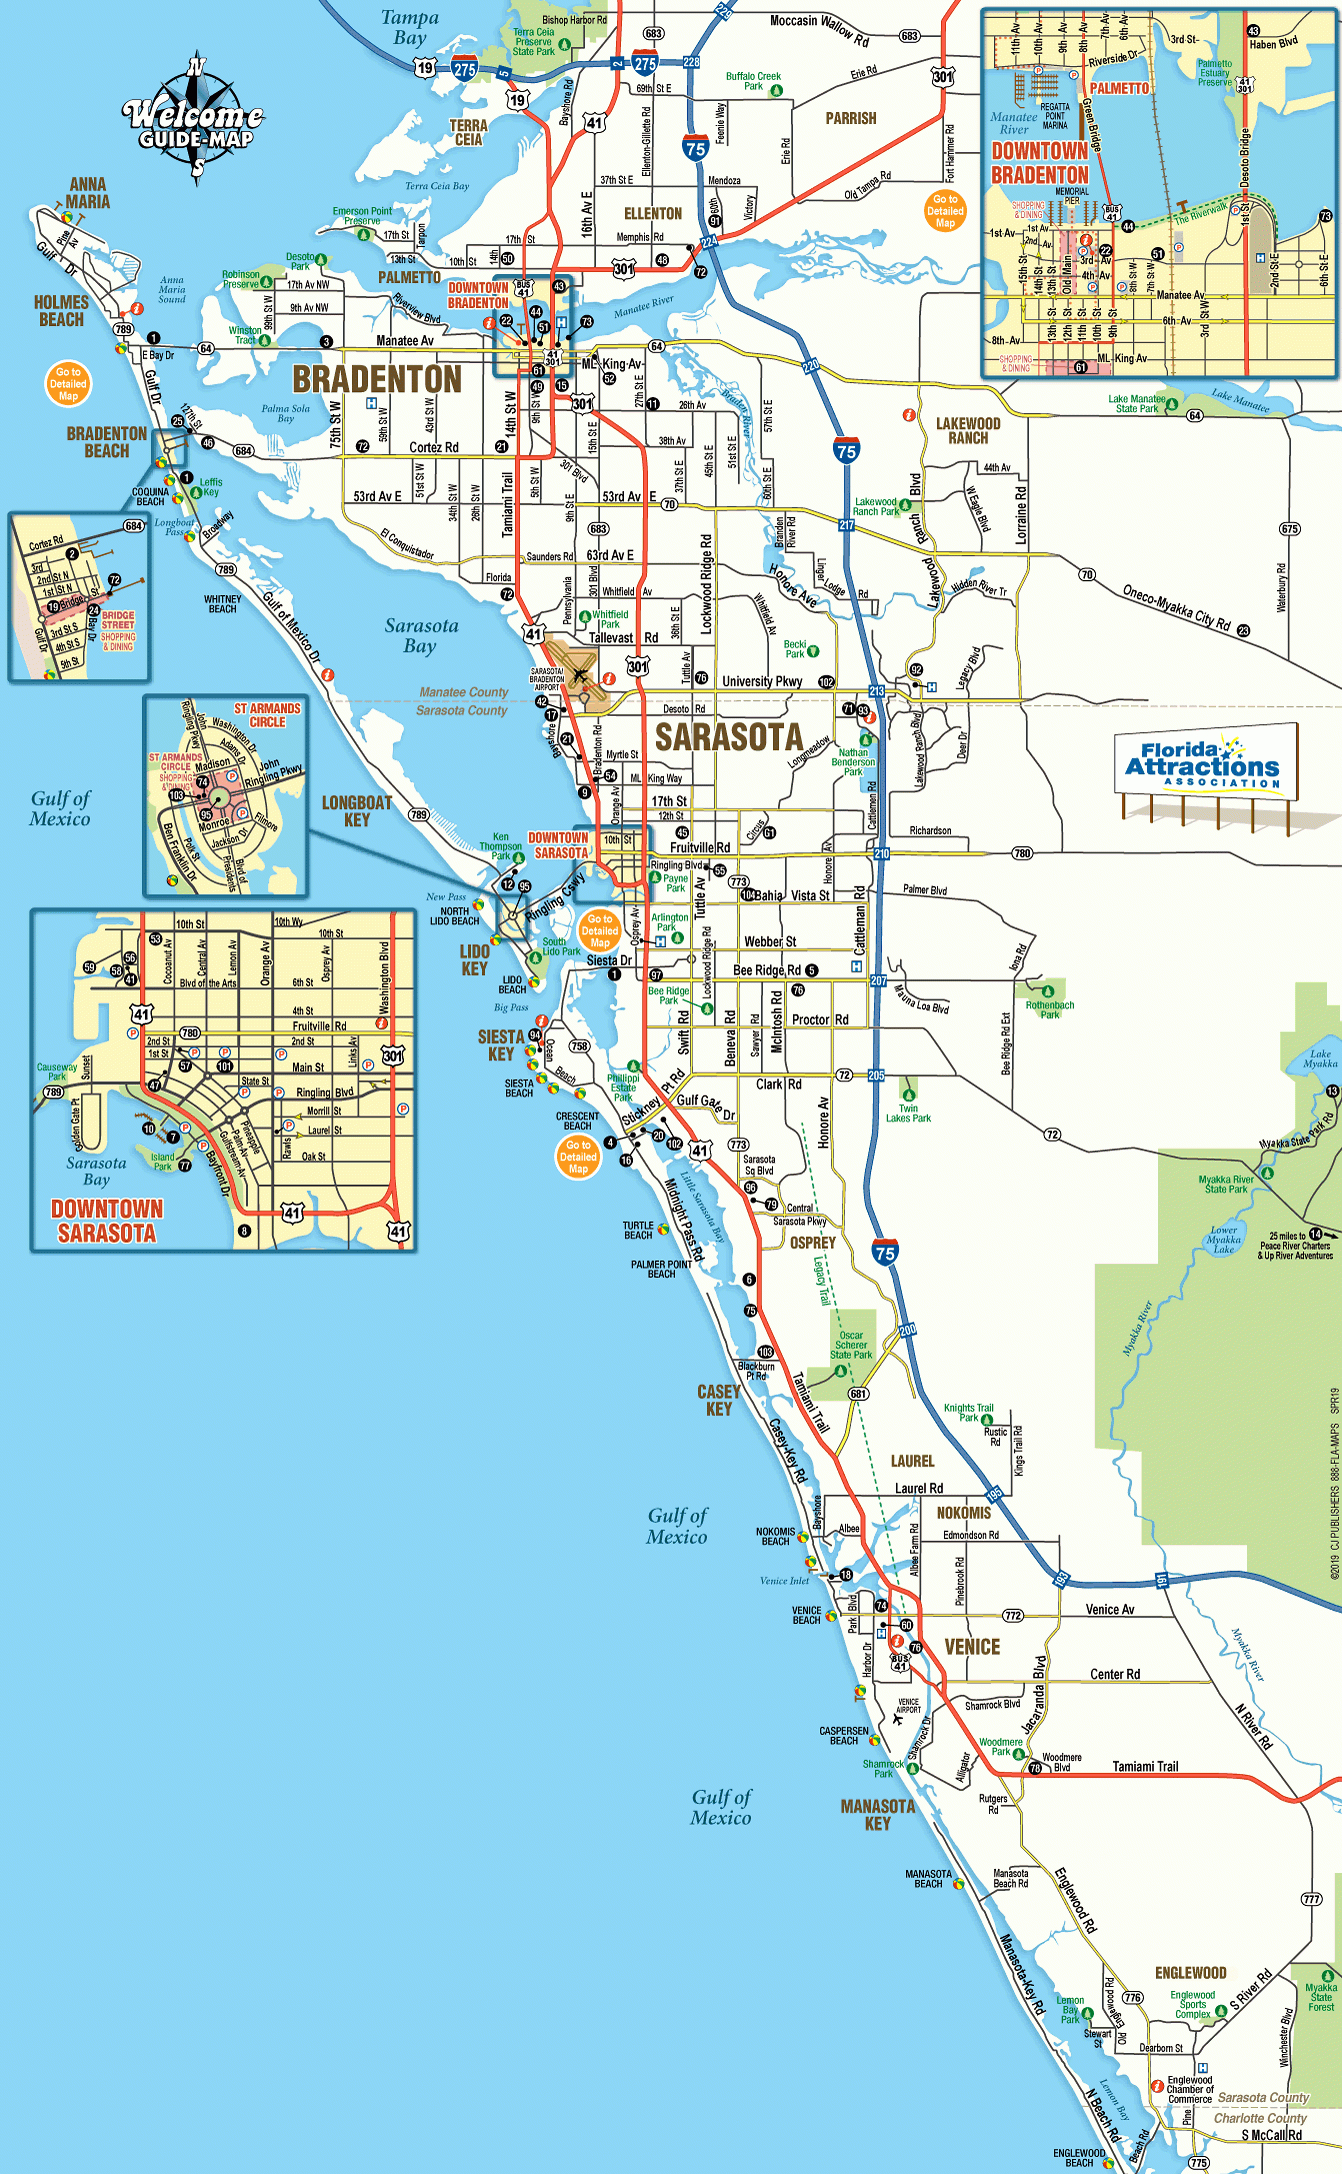 Map Of Sarasota And Bradenton Florida - Welcome Guide-Map To - Map Of South Venice Florida